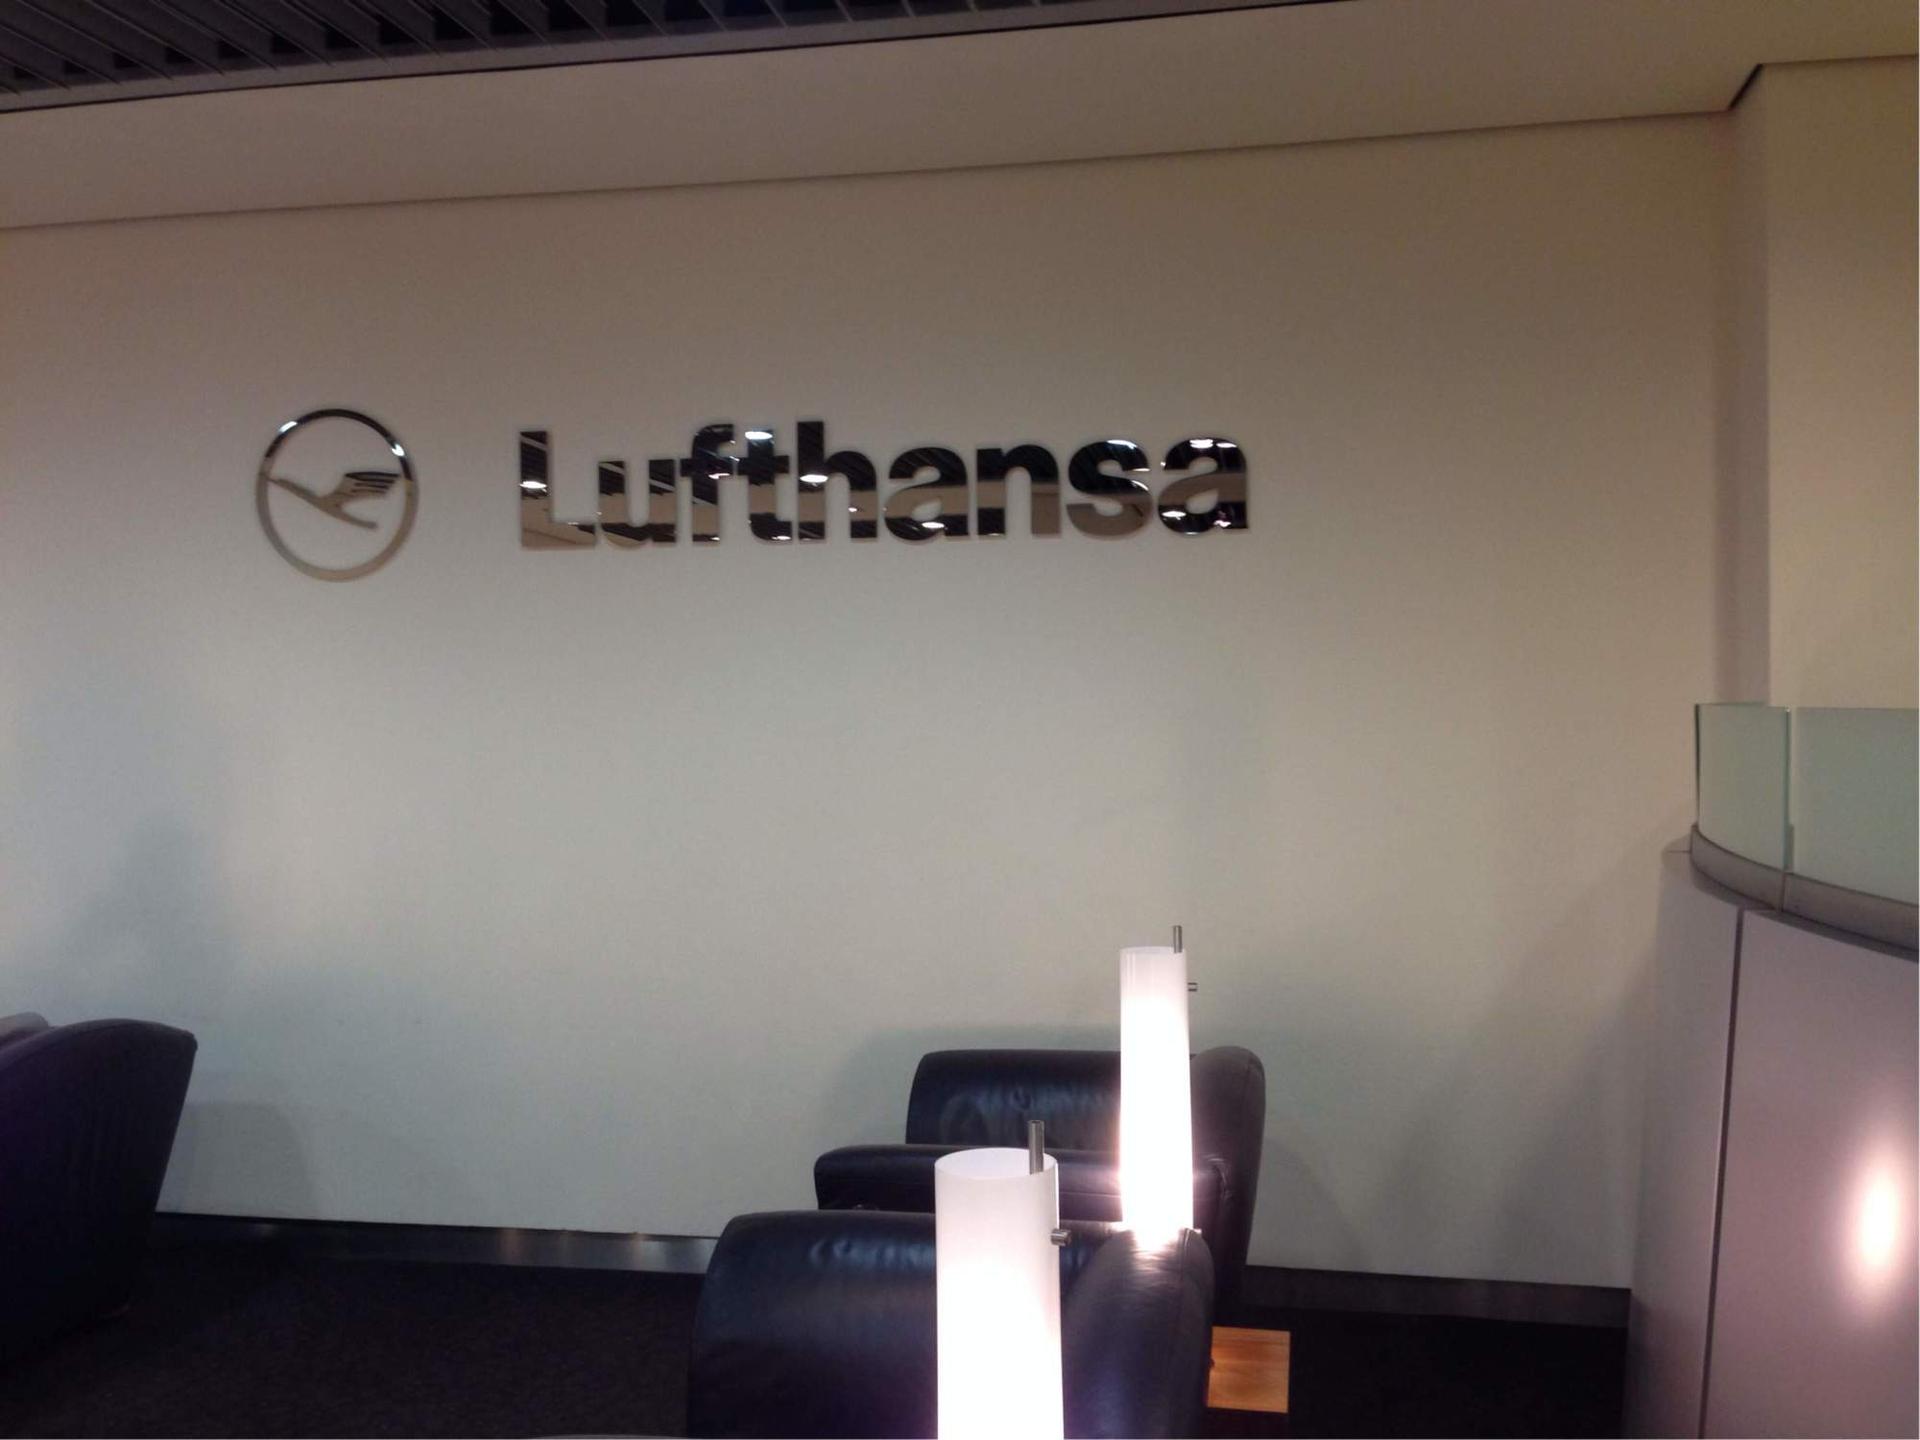 Lufthansa Senator Lounge image 5 of 7